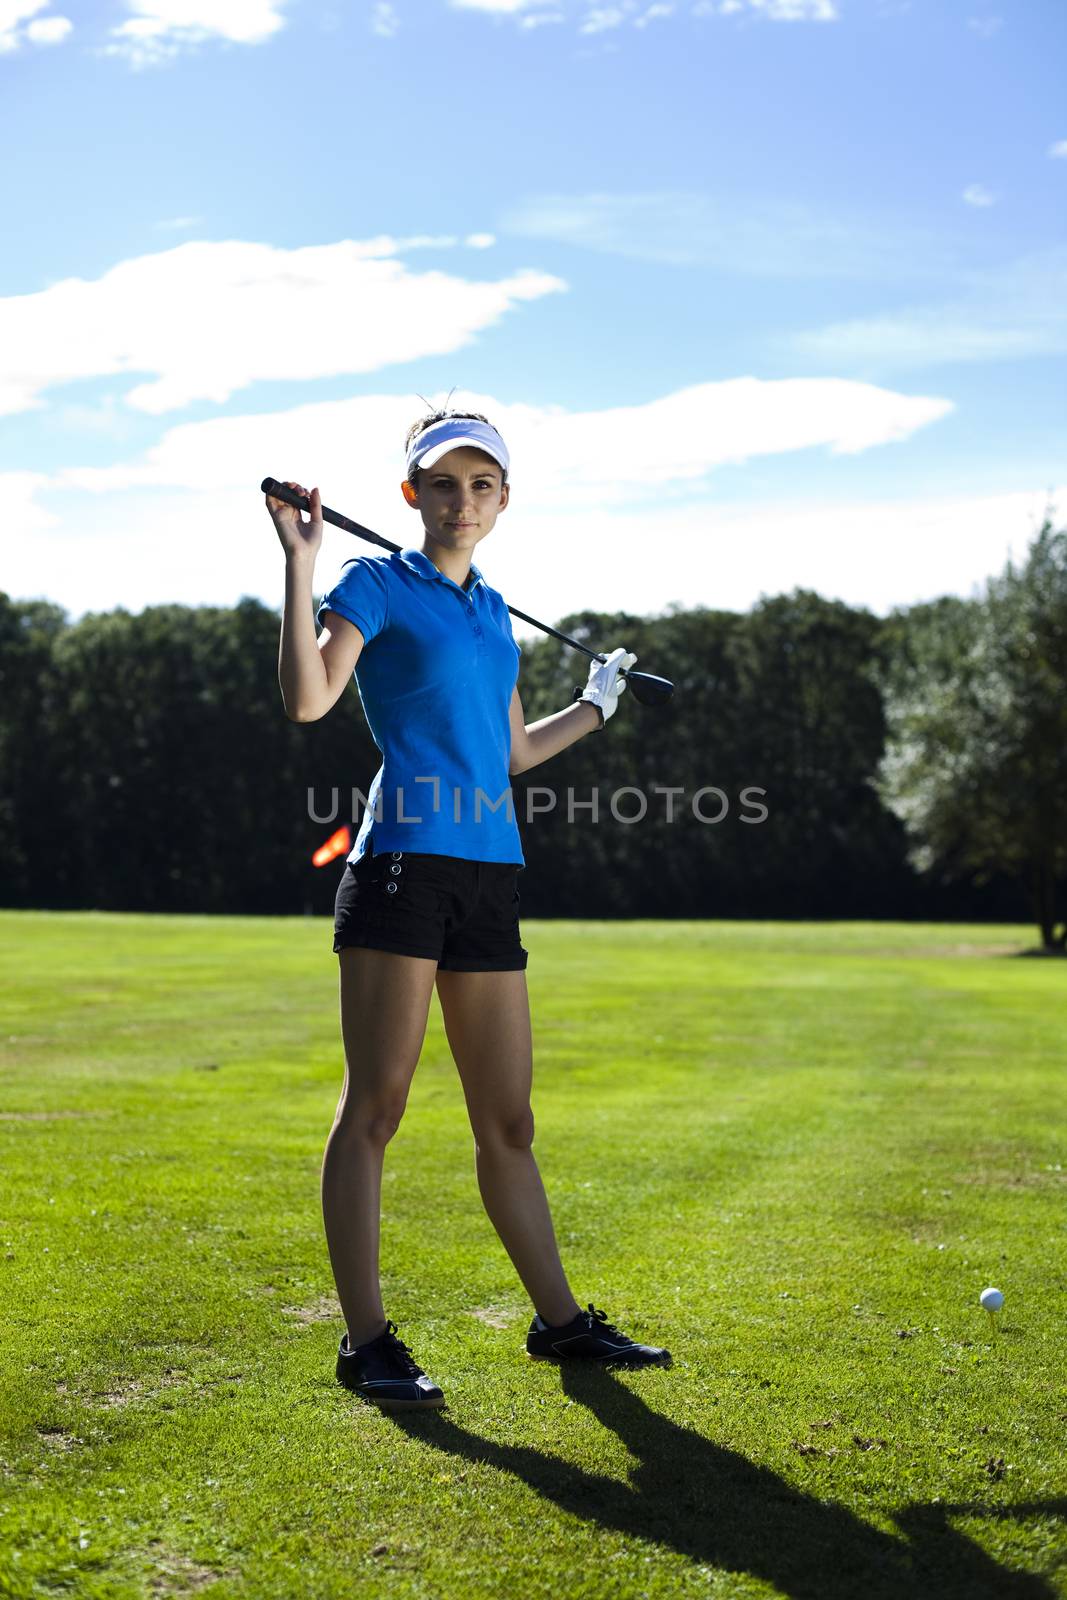 Girl playing golf, bright colorful vivid theme